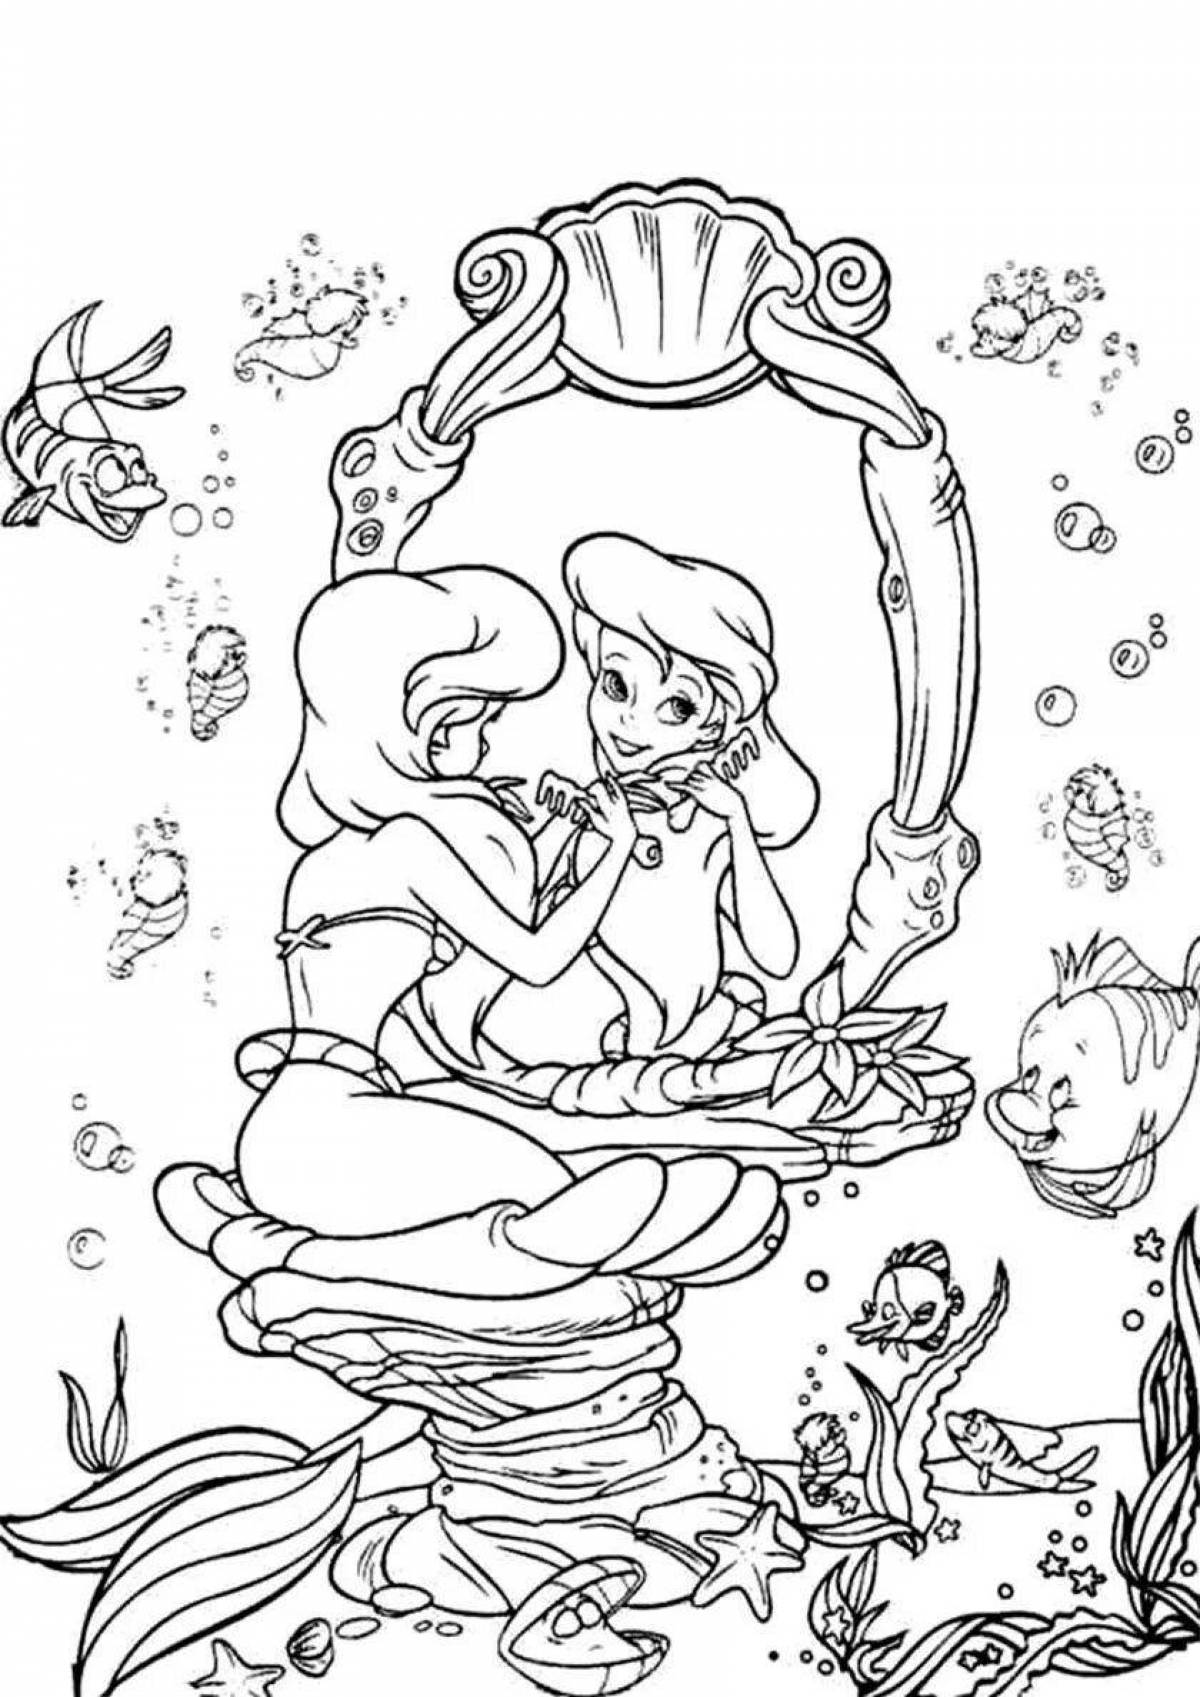 Disney the little mermaid coloring book